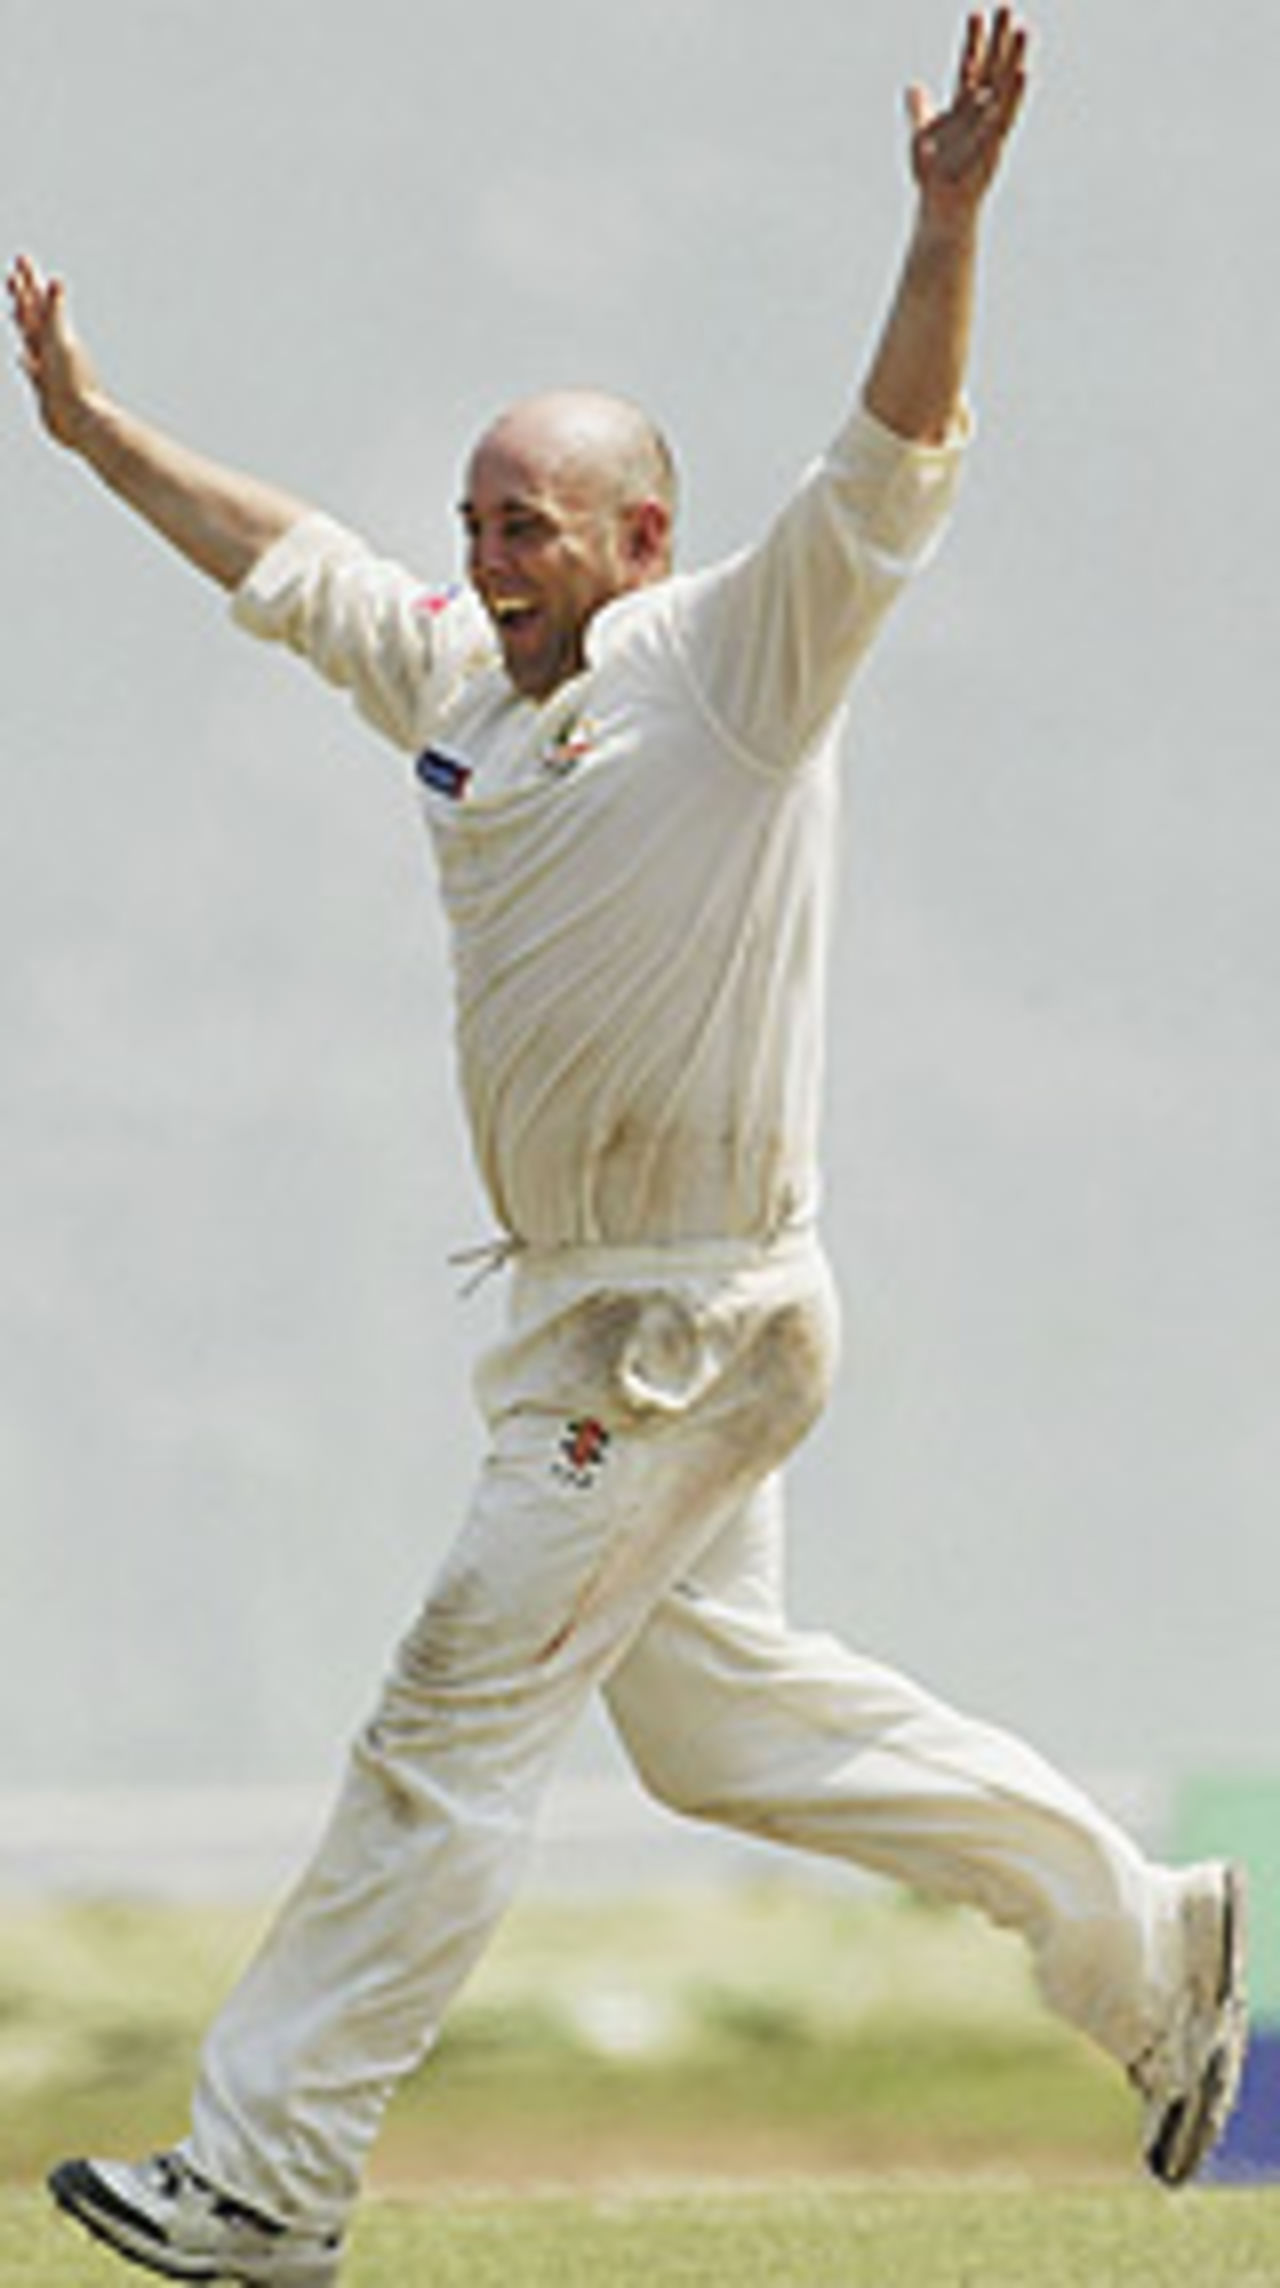 Darren Lehmann celebrates a wicket, Sri Lanka v Australia, 3rd Test, Colombo, 5th day, March 28, 2004